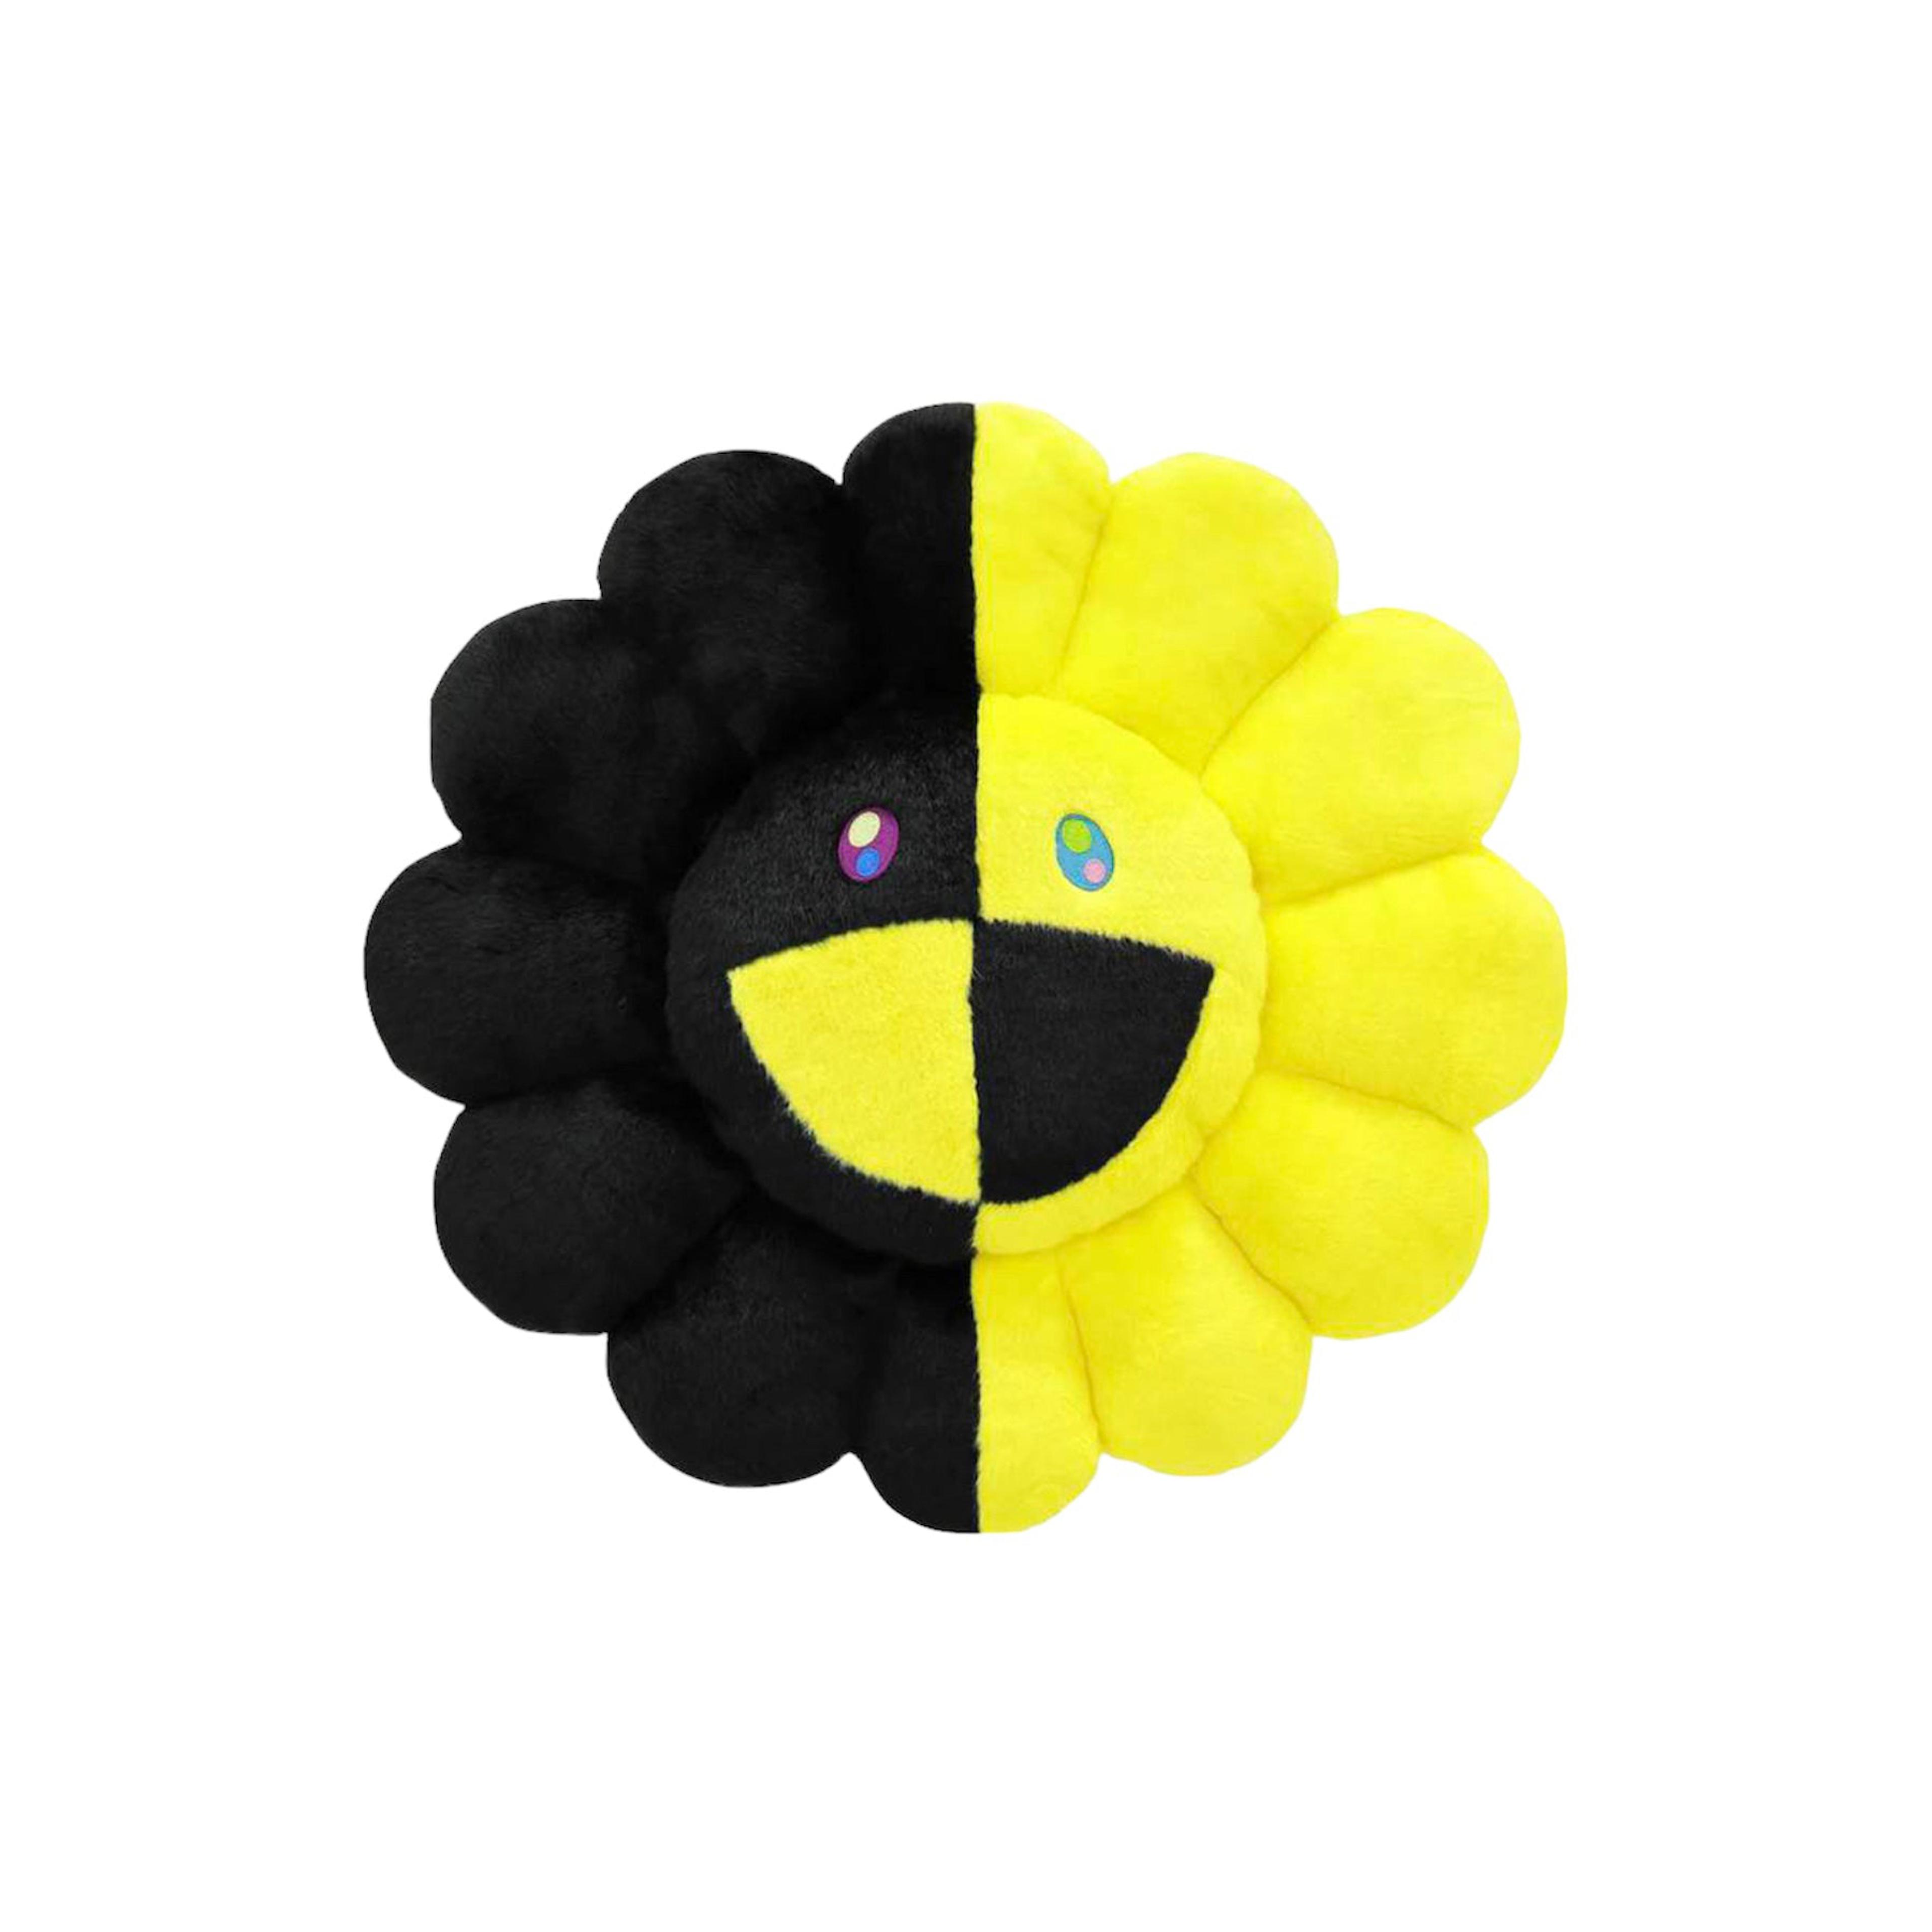 Takashi Murakami x HIKARU Collaboration Flower Plush Black/Yello